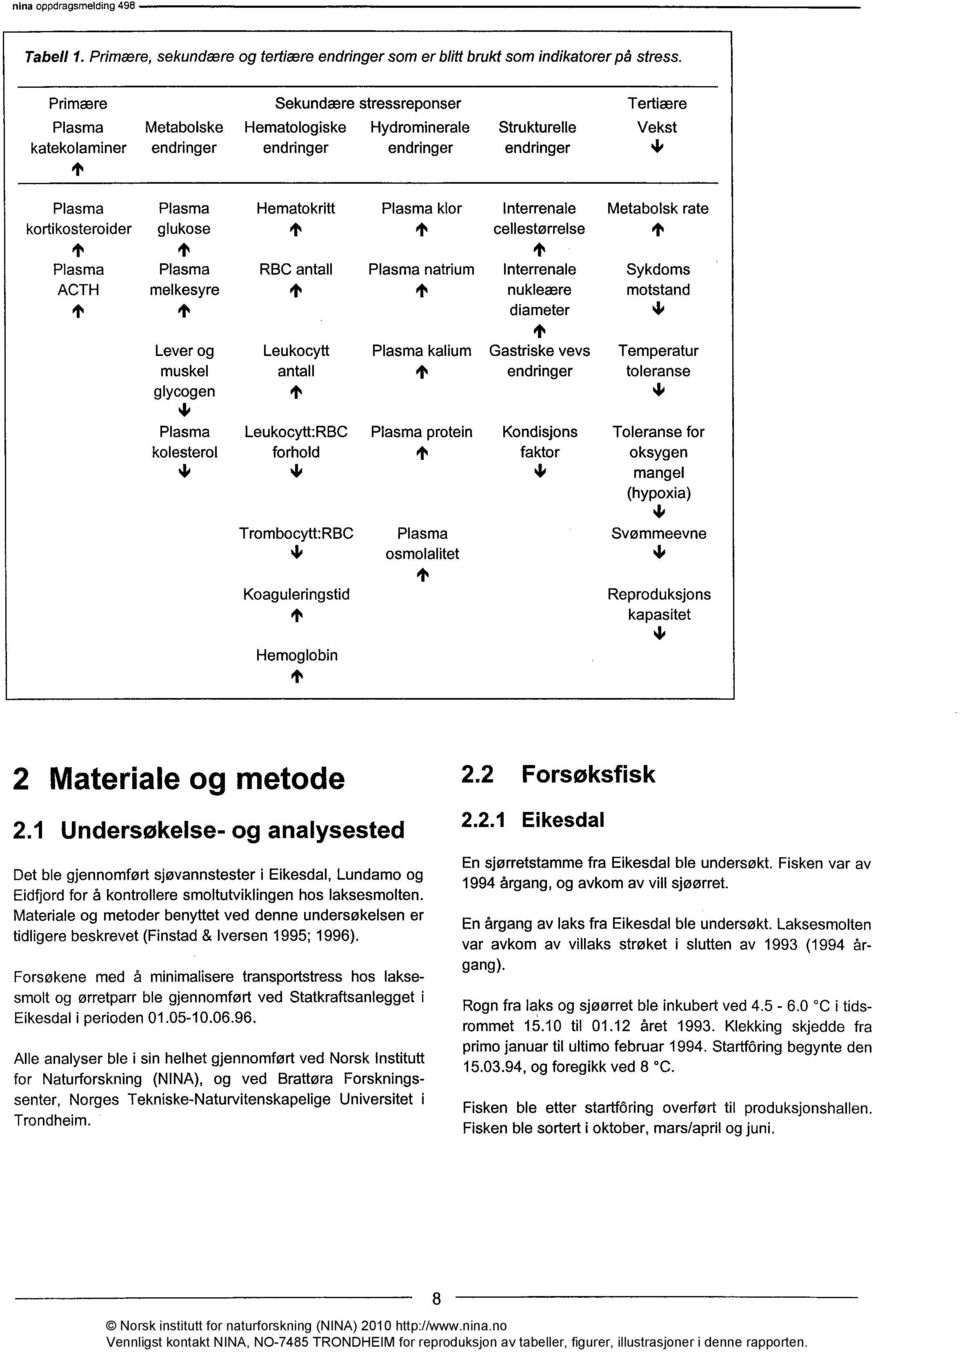 Materiale og metoder benyttet ved denne undersøkelsen er tidligere beskrevet (Finstad & Iversen 1995; 1996).